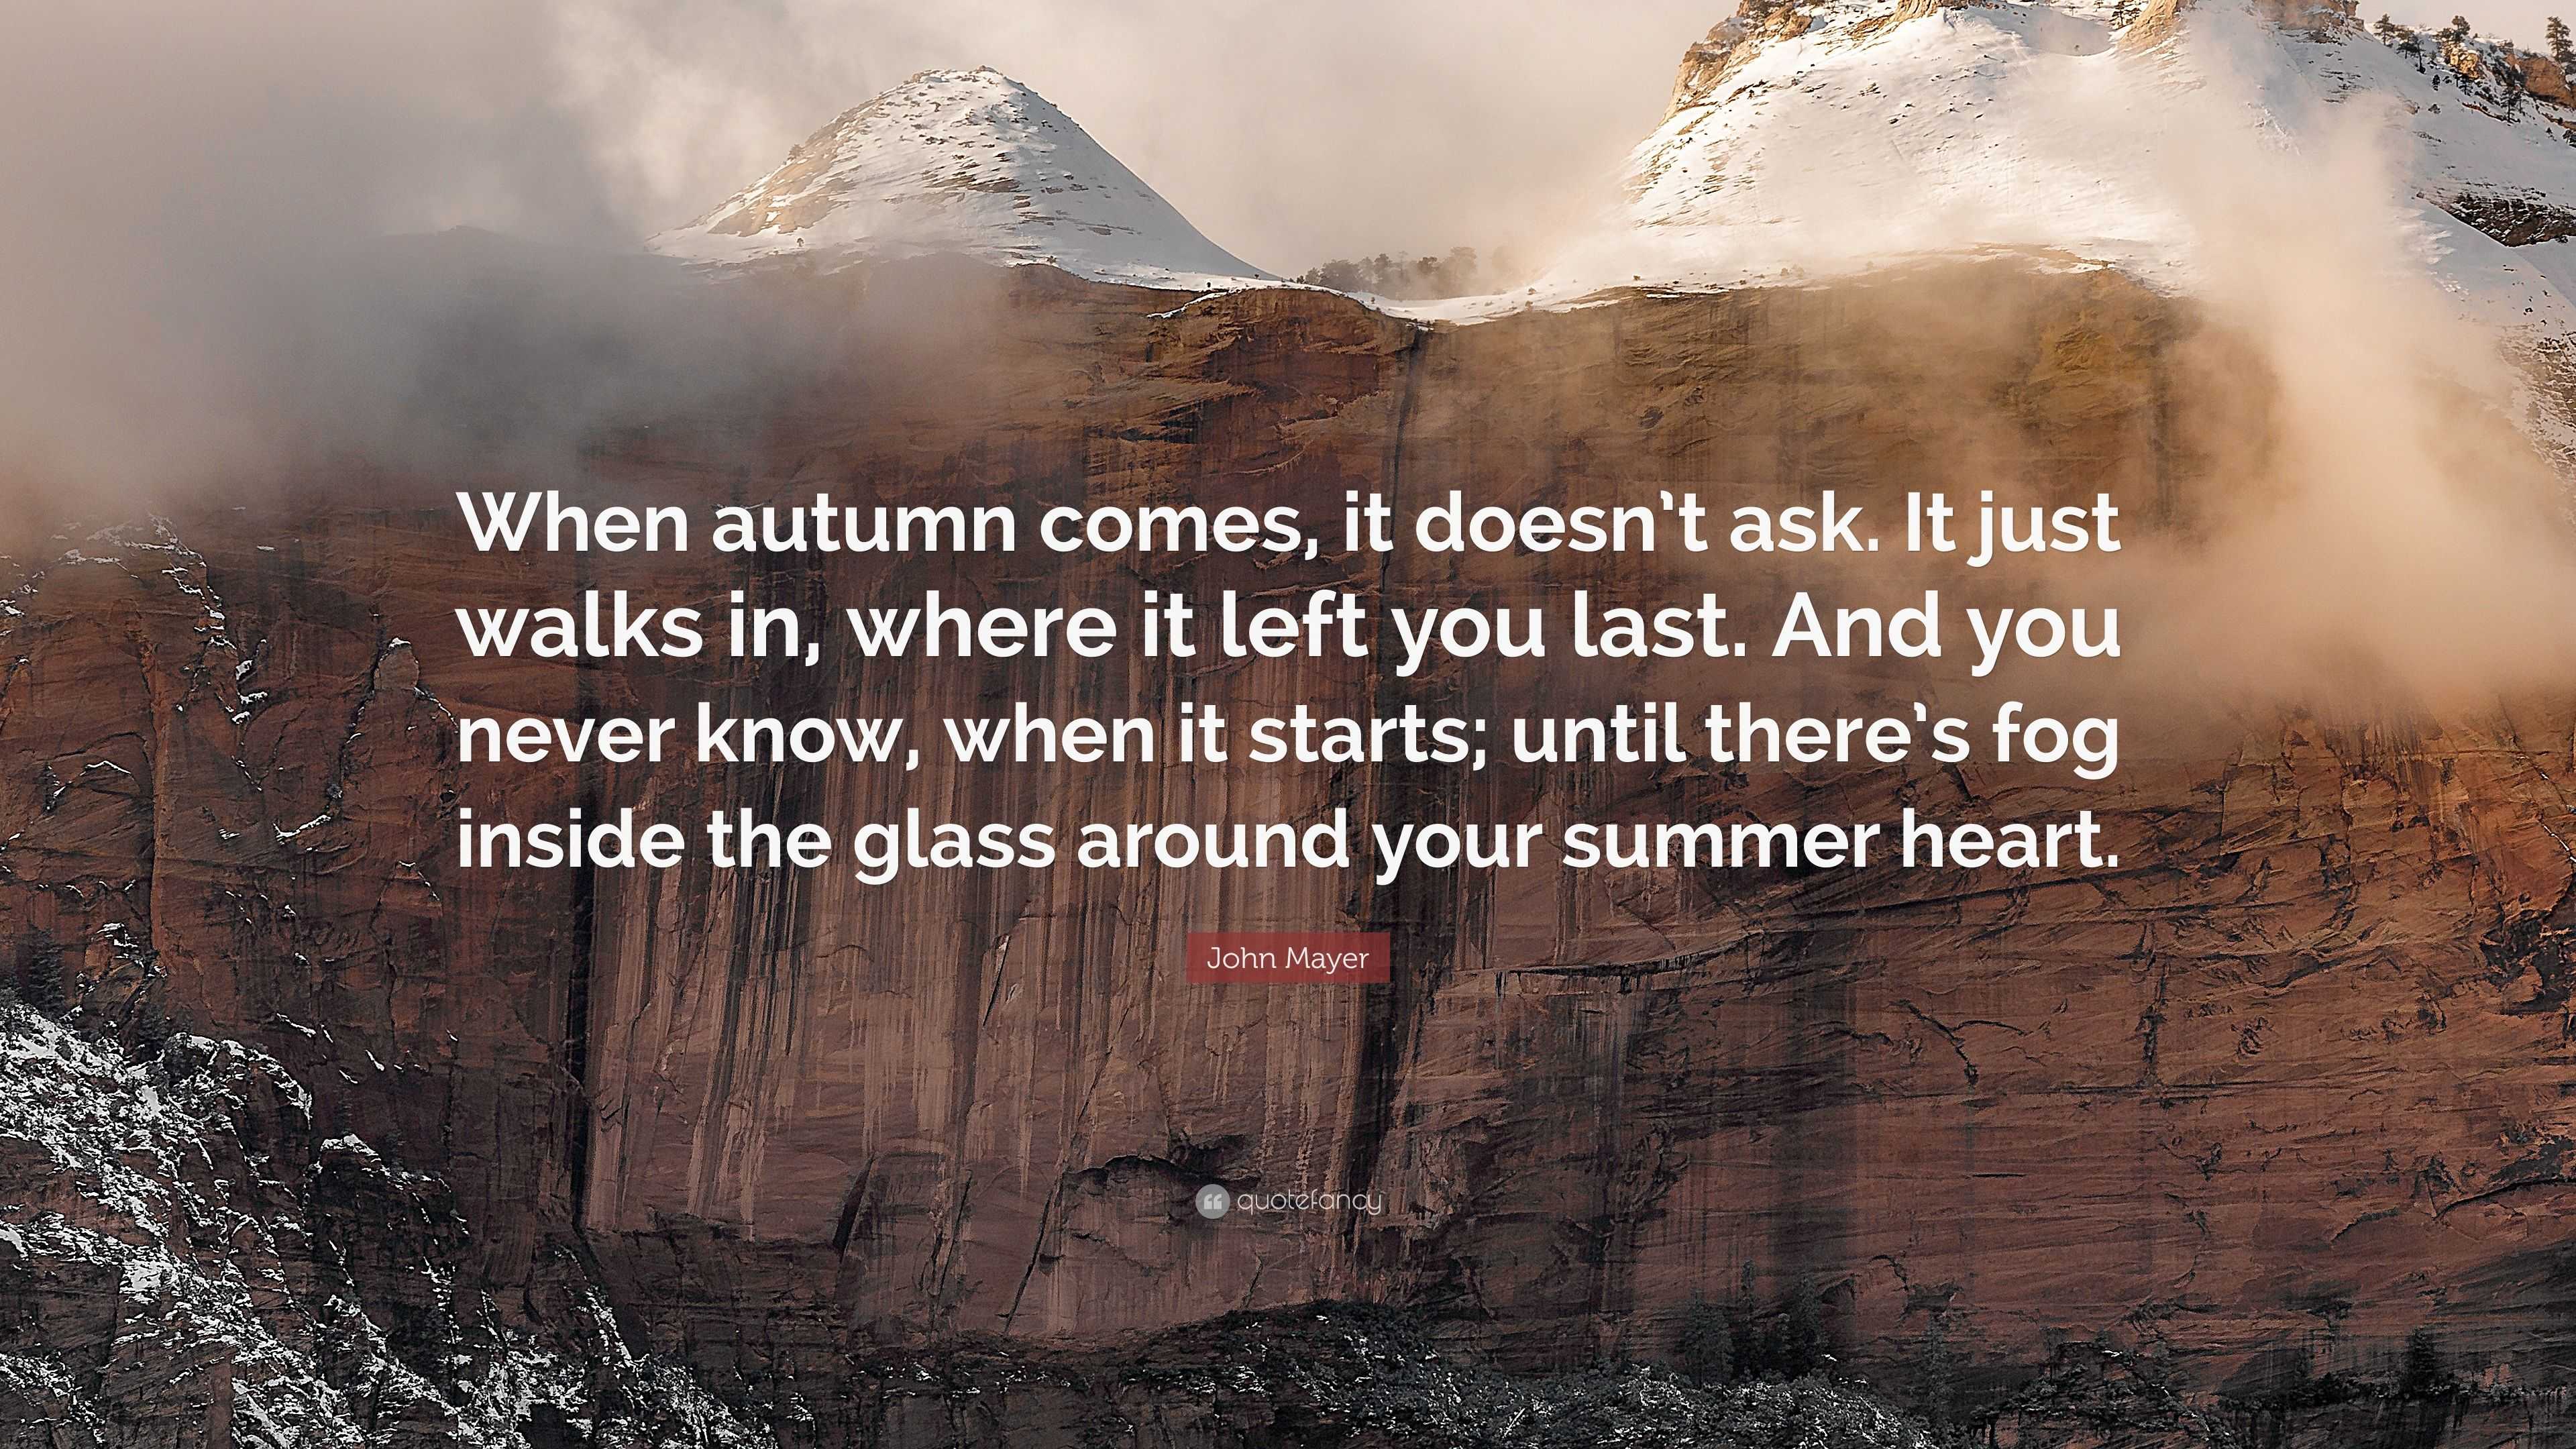 John Mayer Quote “When autumn es it doesn t ask It